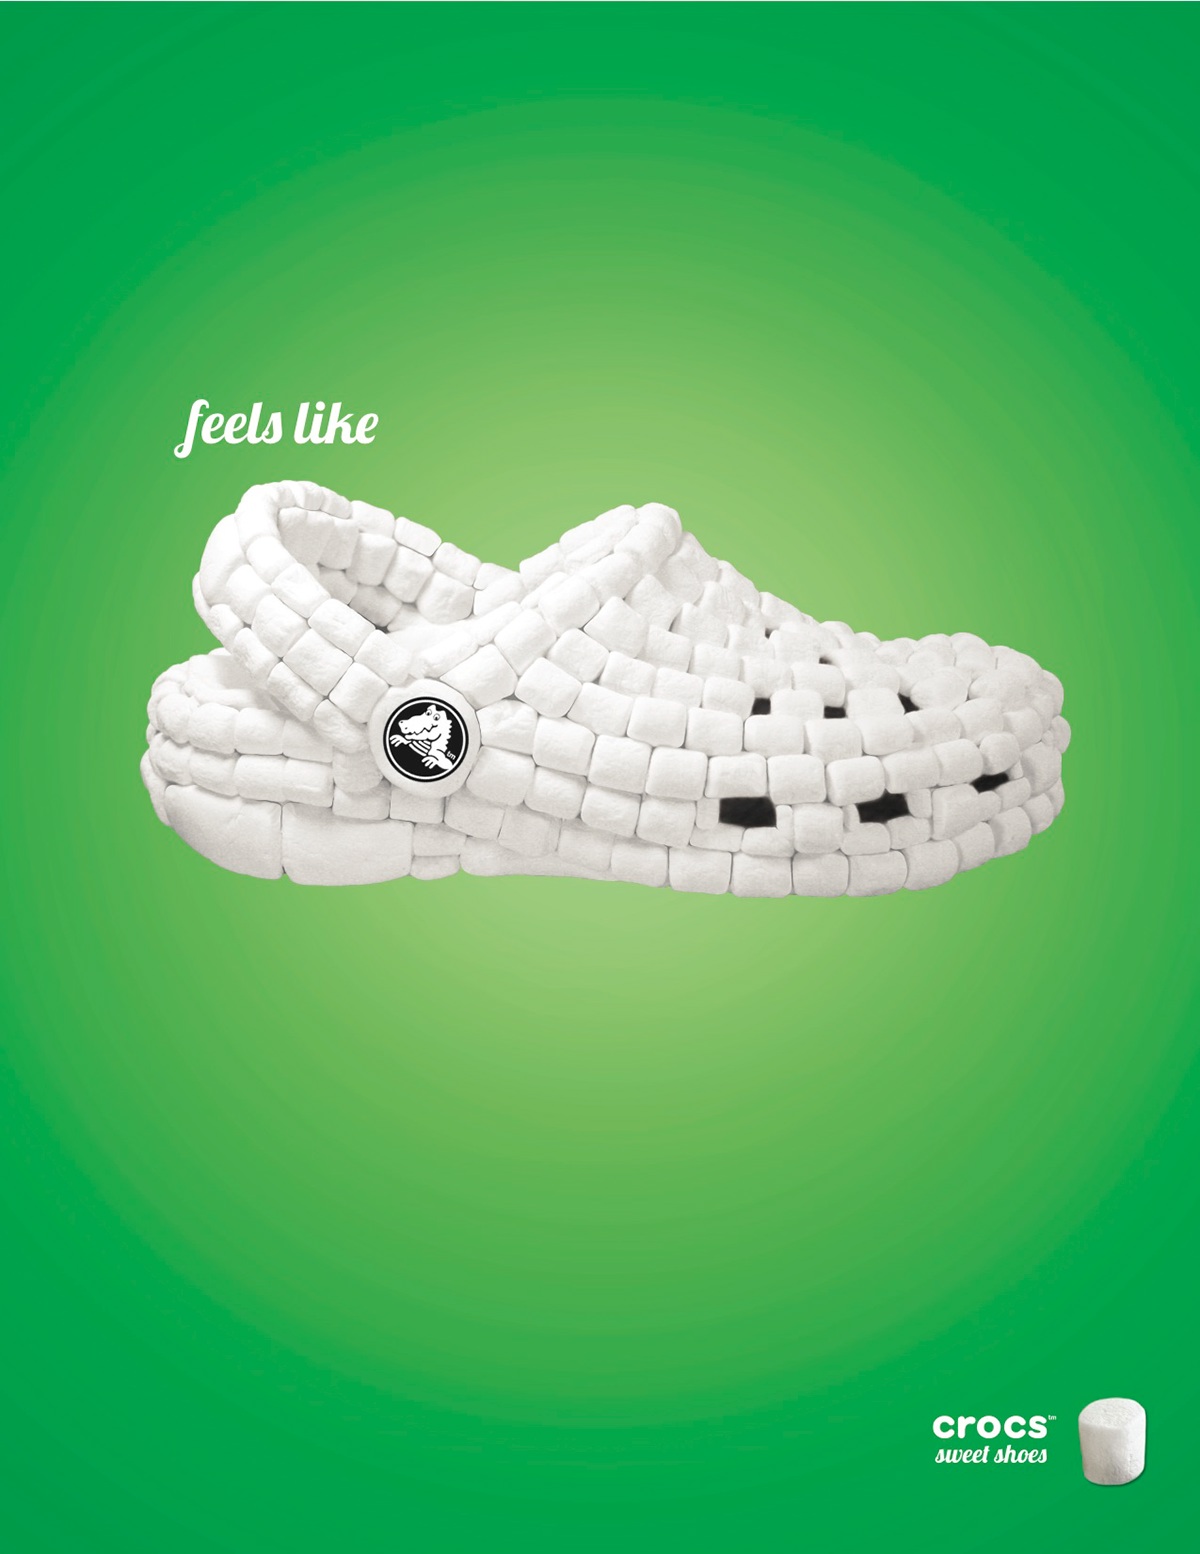 Crocs marshmallow shoe